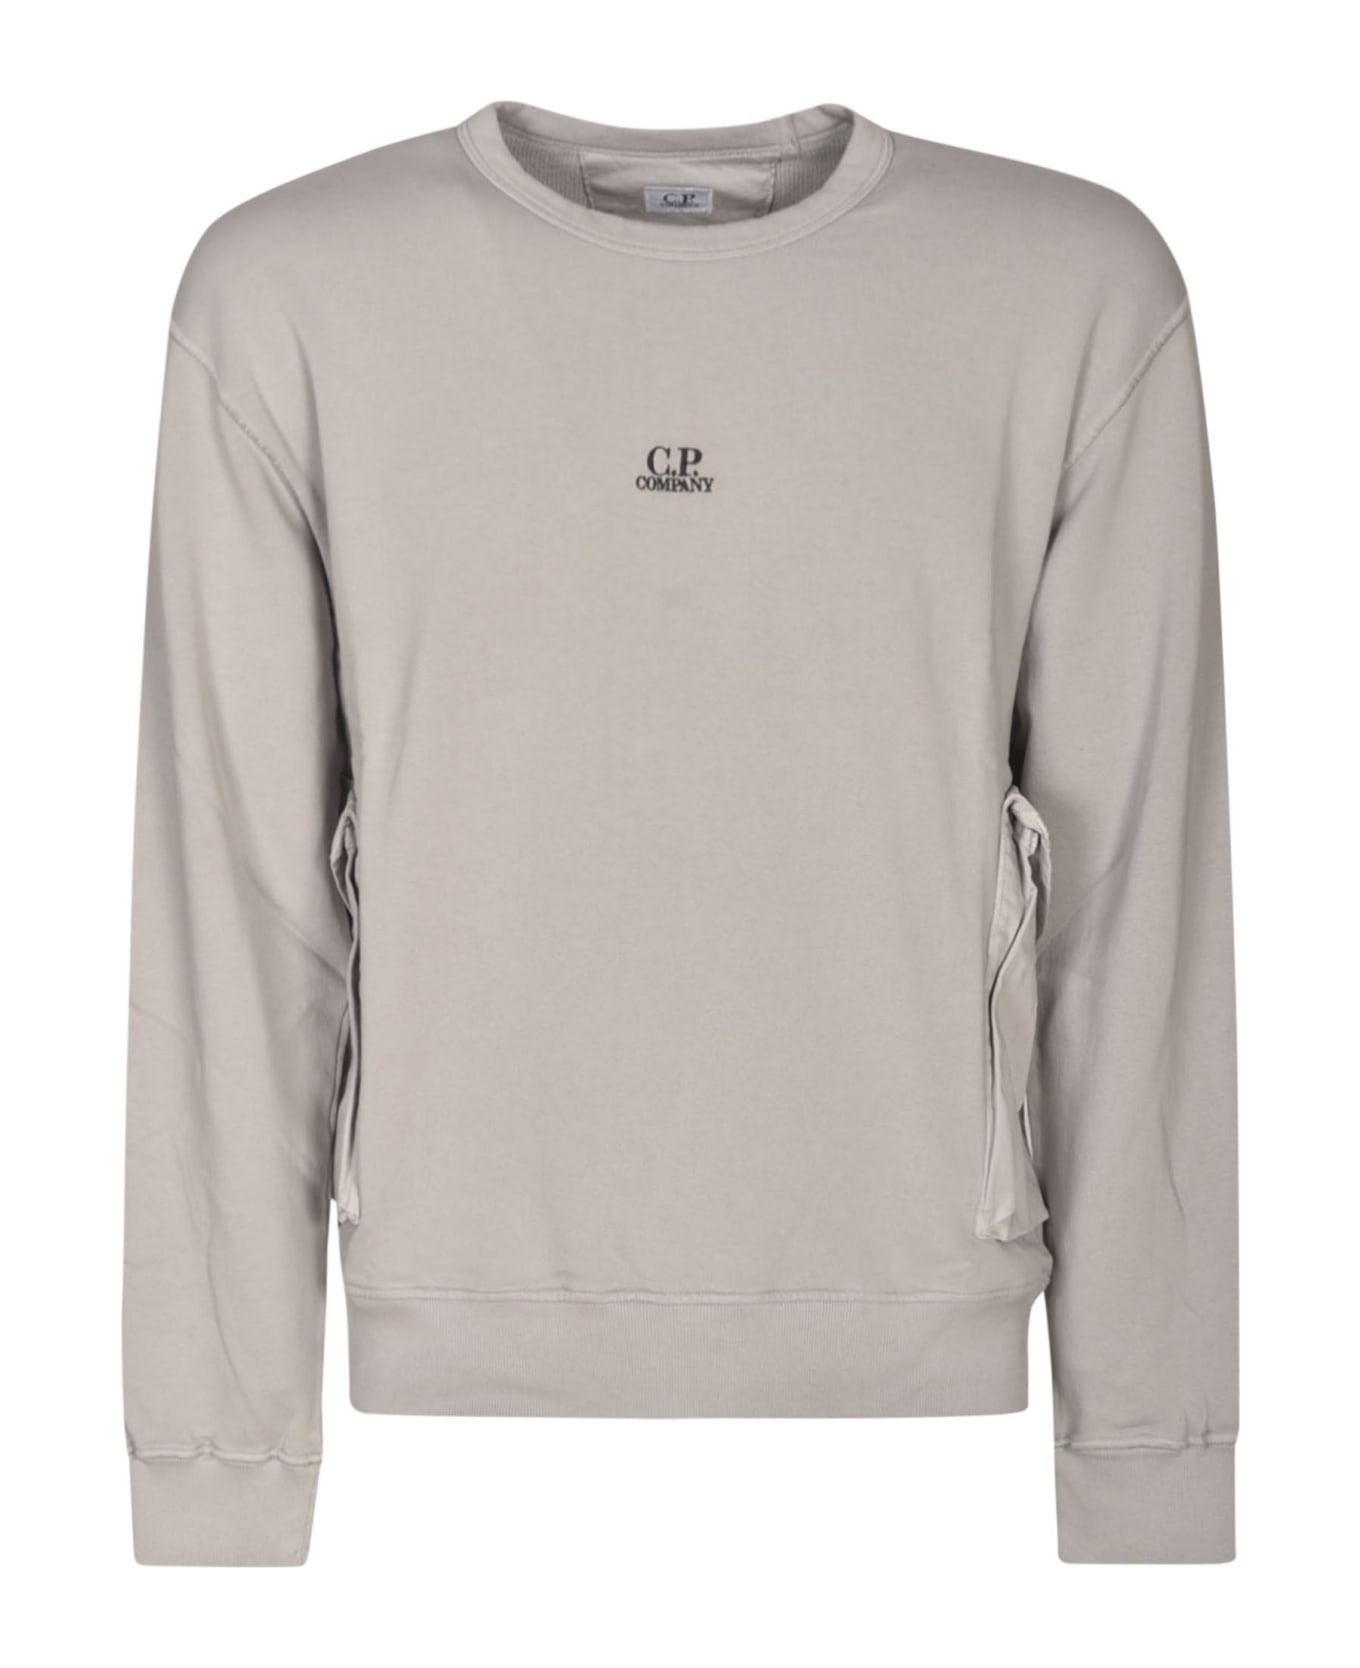 C.P. Company Logo Sweatshirt - Drizzle Grey